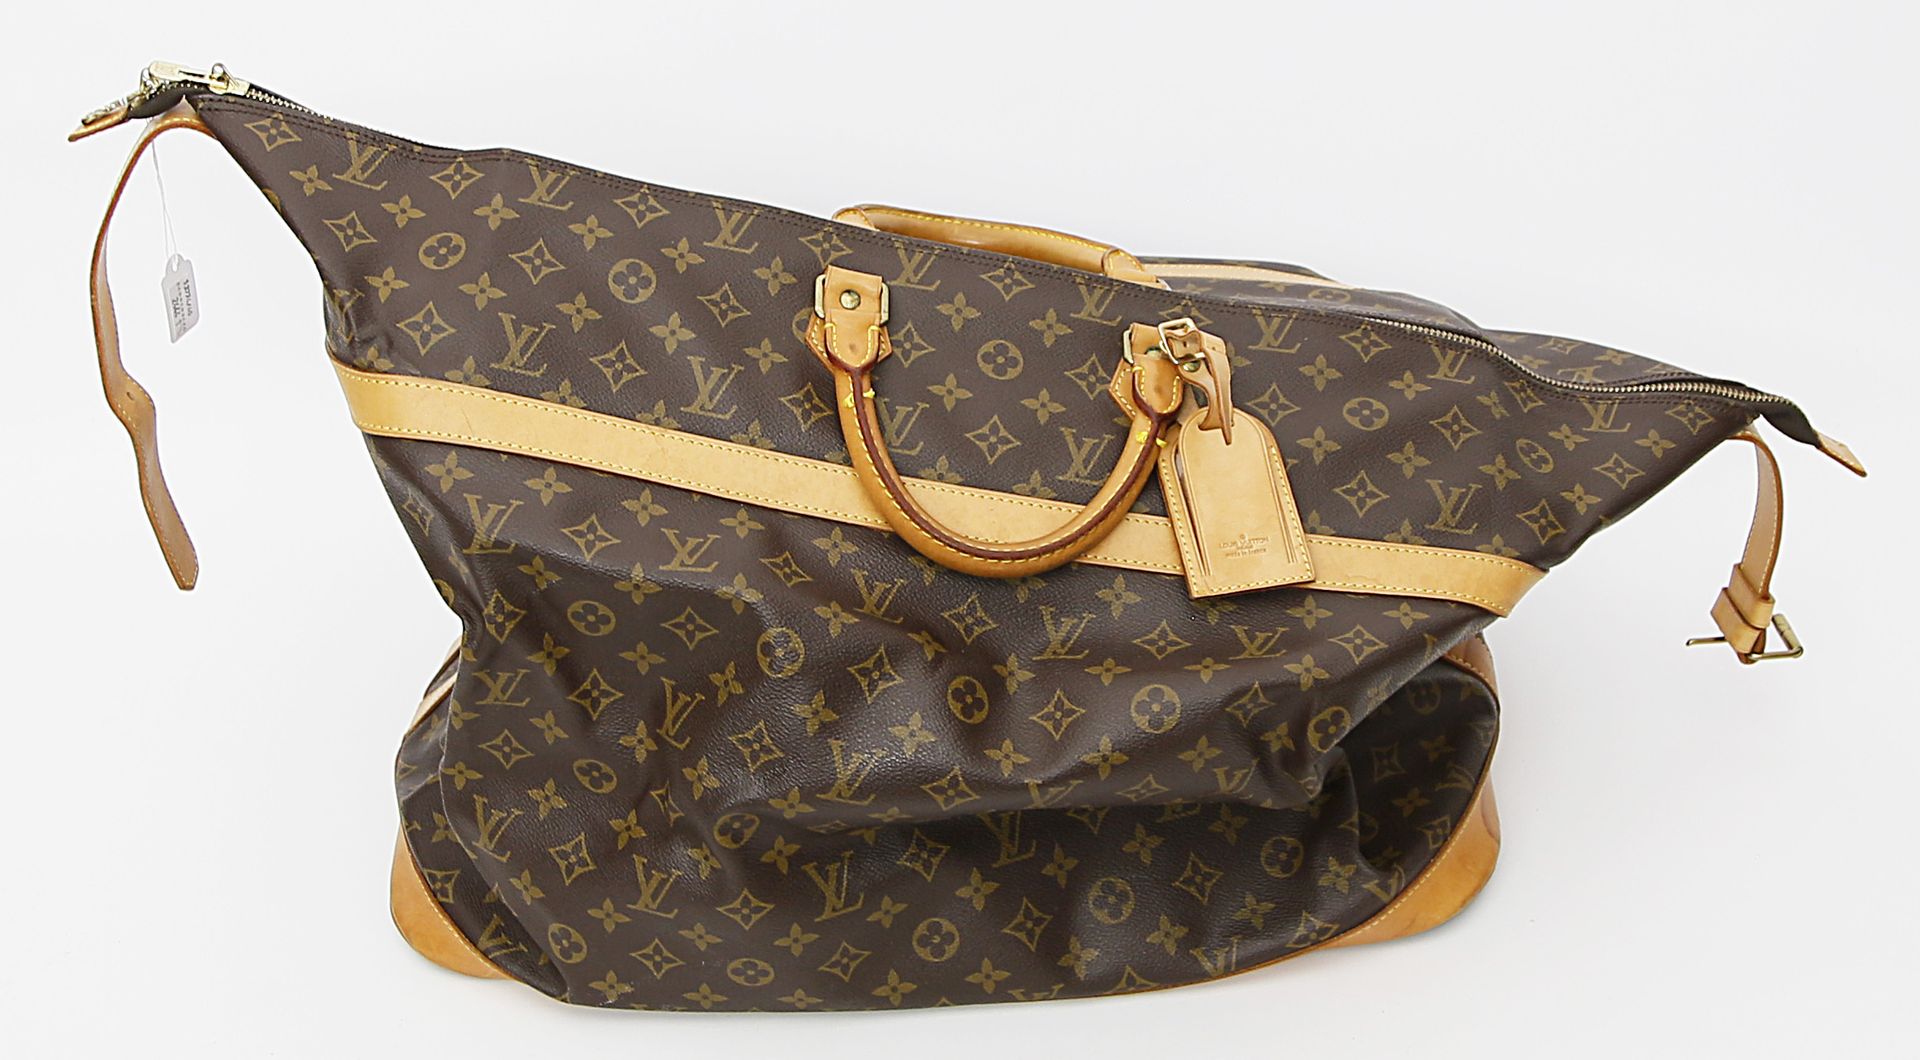 Travel bag "Cruiser 50 ", Louis Vuitton.